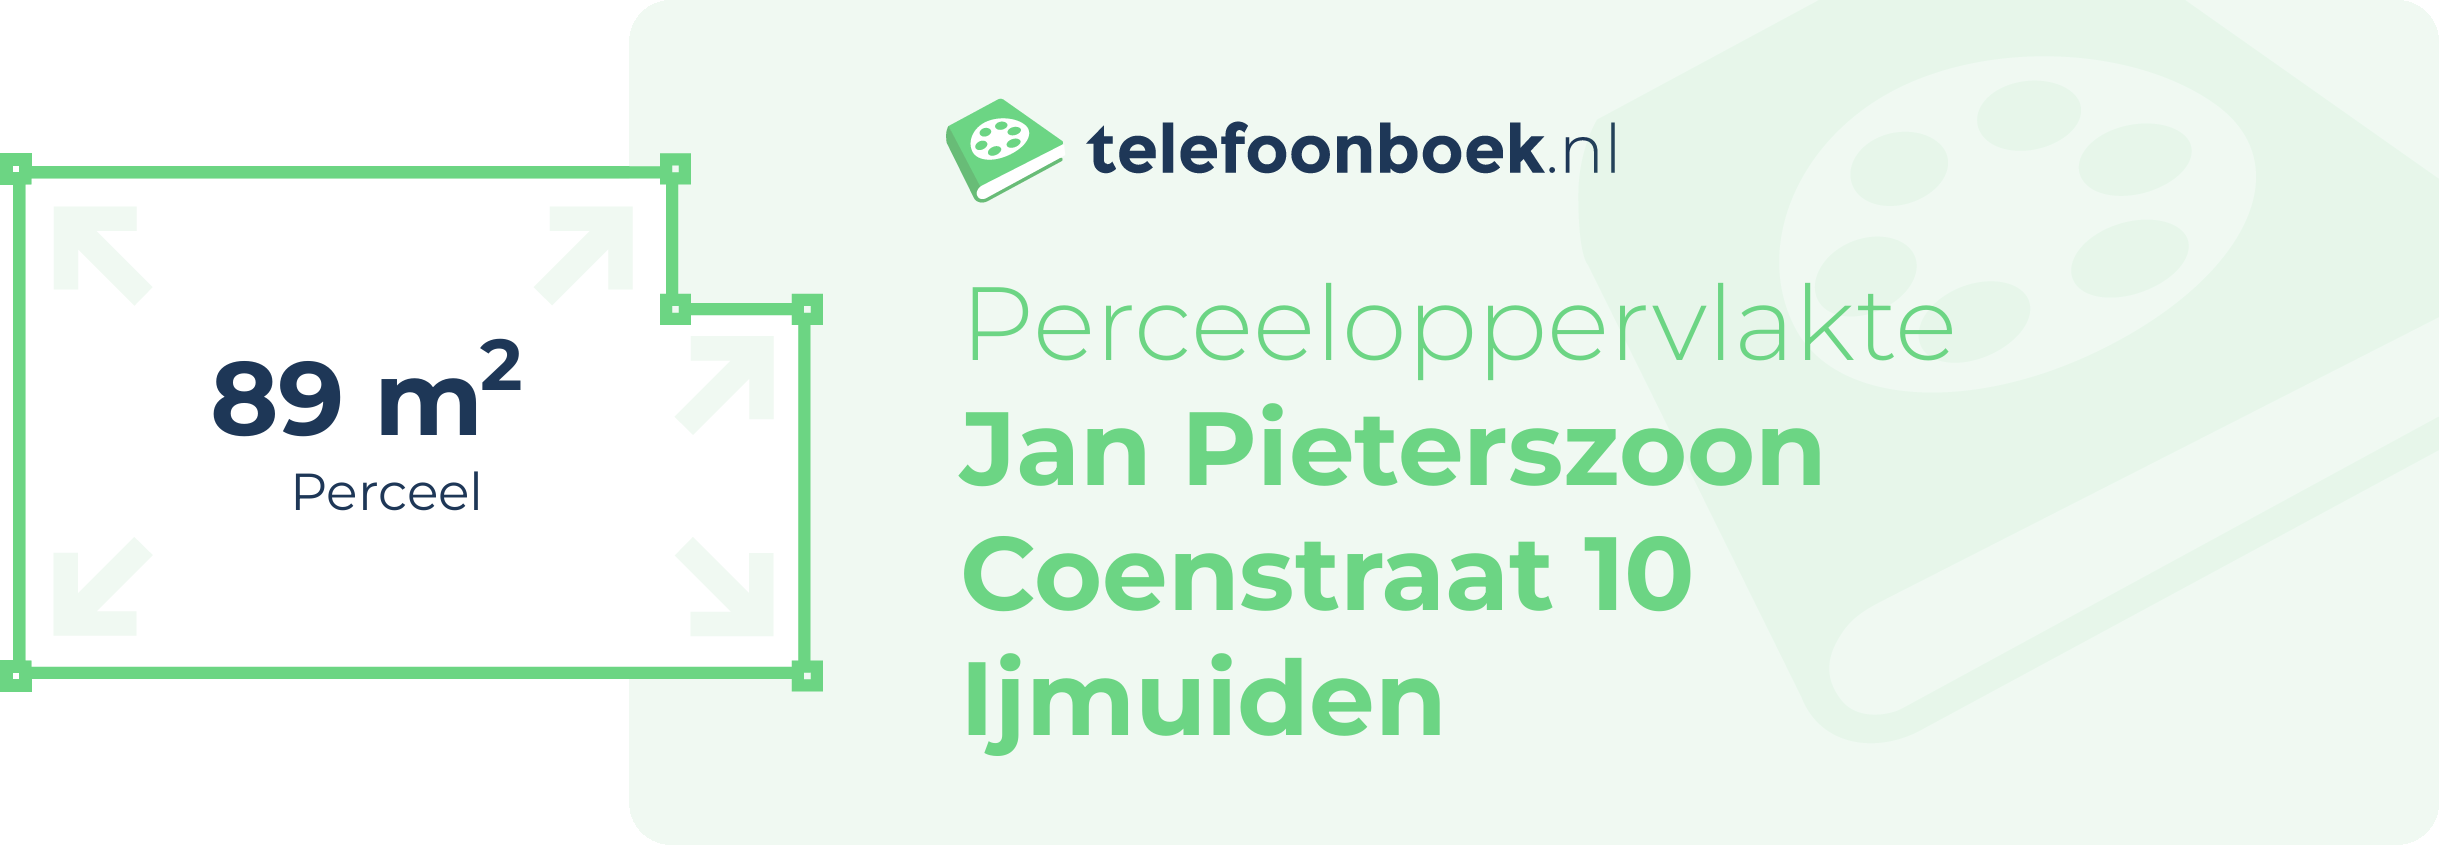 Perceeloppervlakte Jan Pieterszoon Coenstraat 10 Ijmuiden